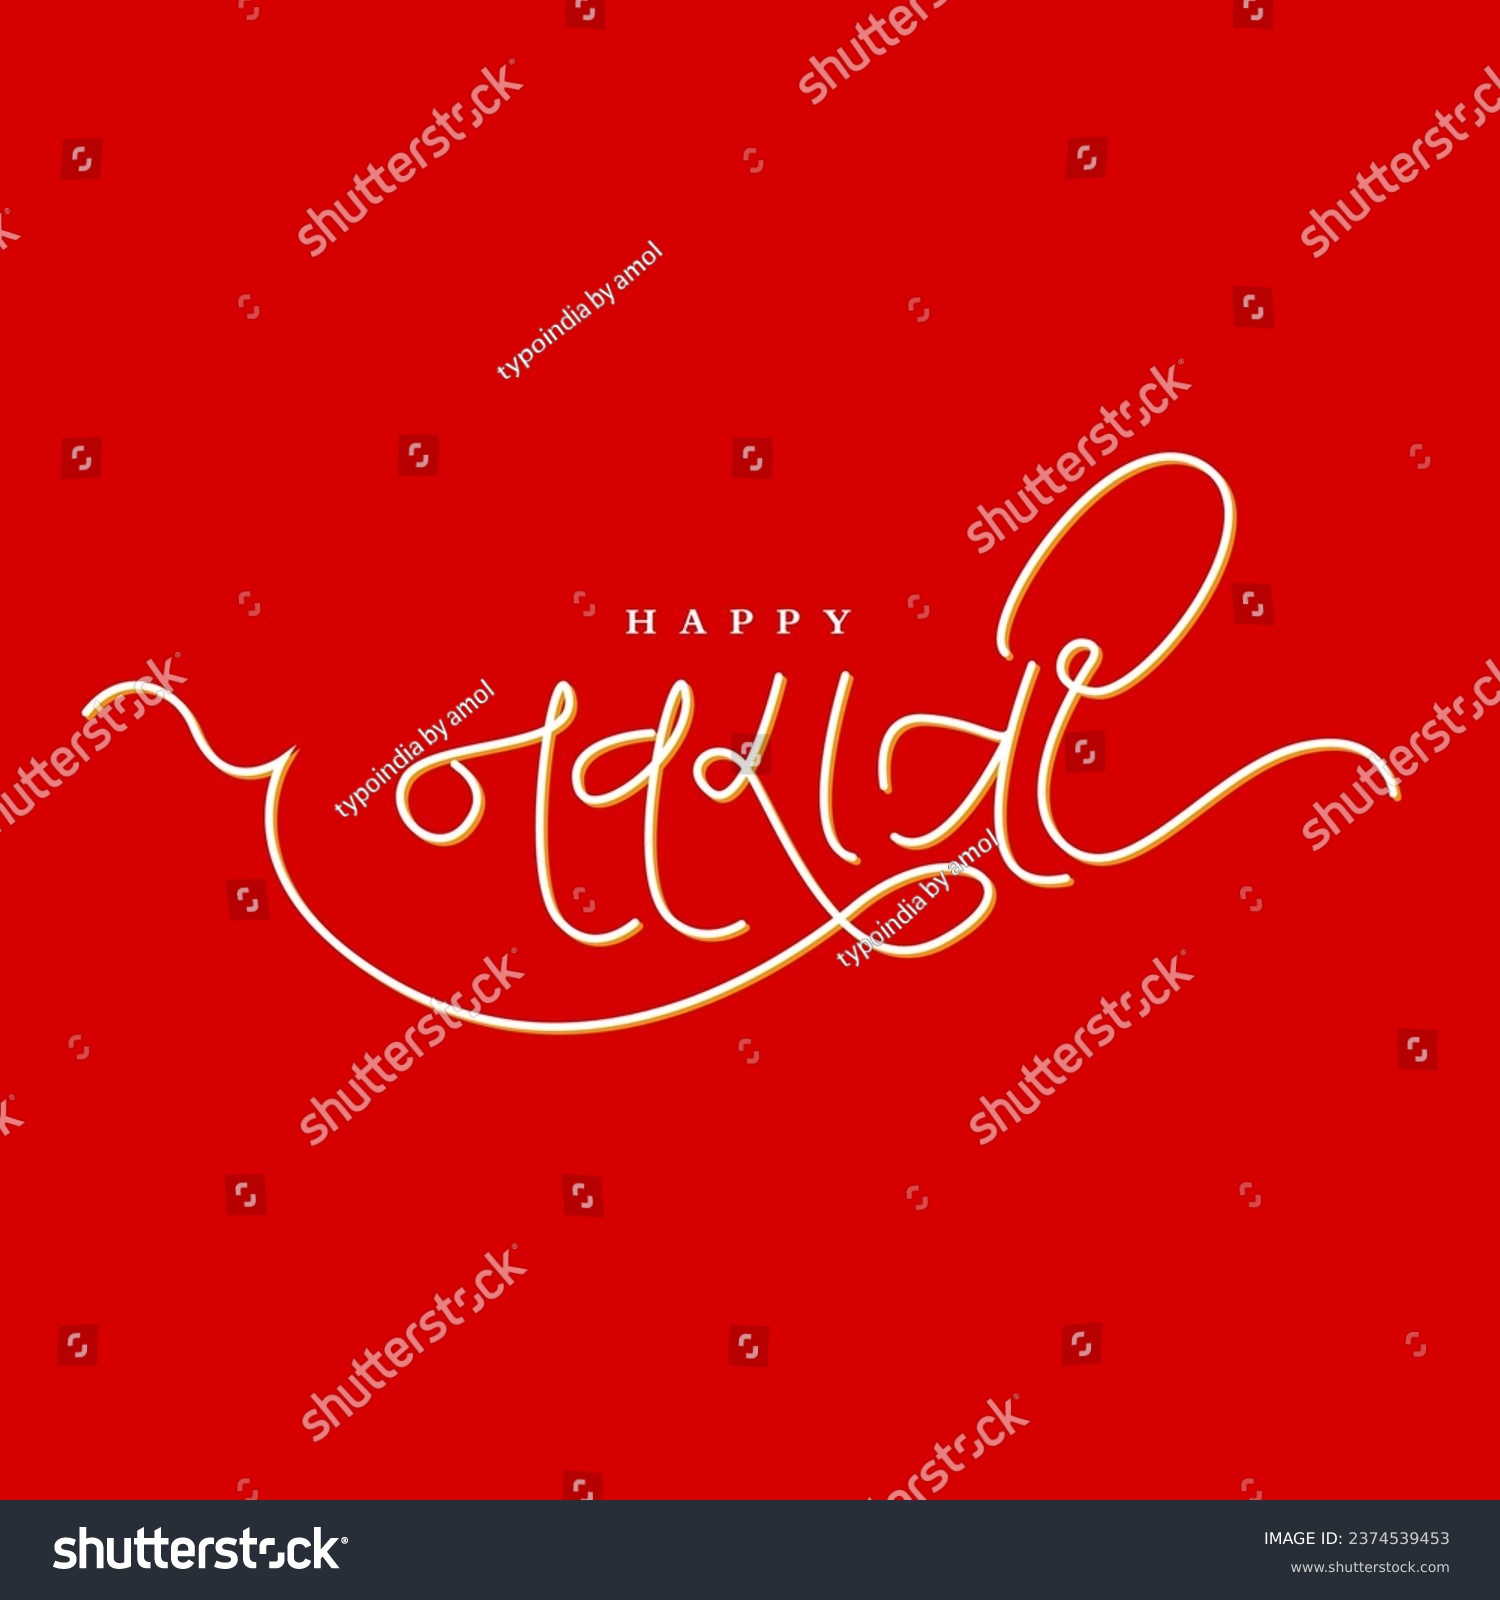 SVG of Happy Navratri written in Devanagari calligraphy post. svg